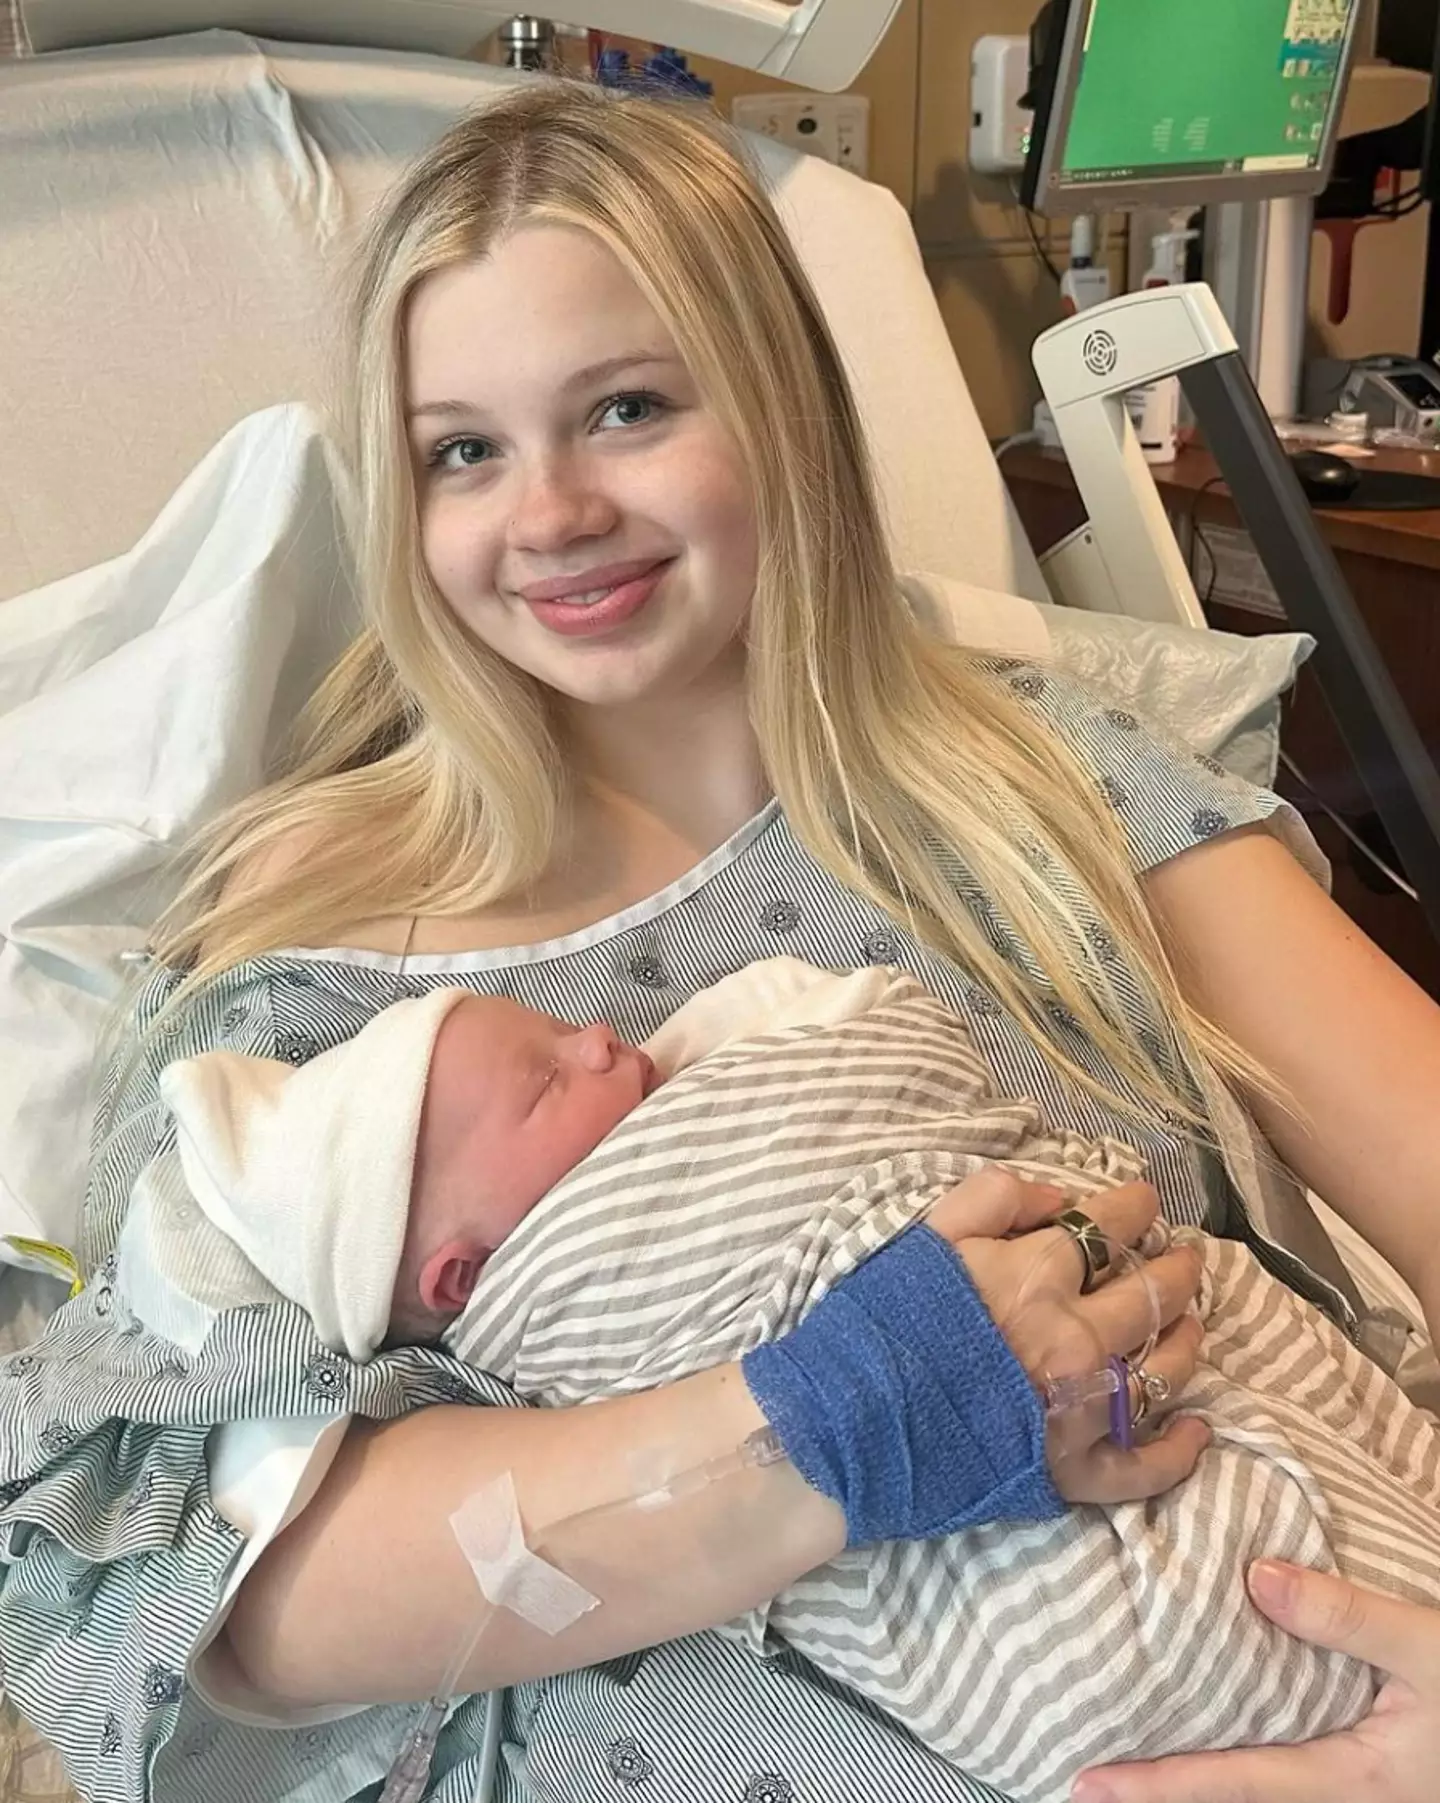 Maddie welcomed her baby son, Ryder James, just last week.